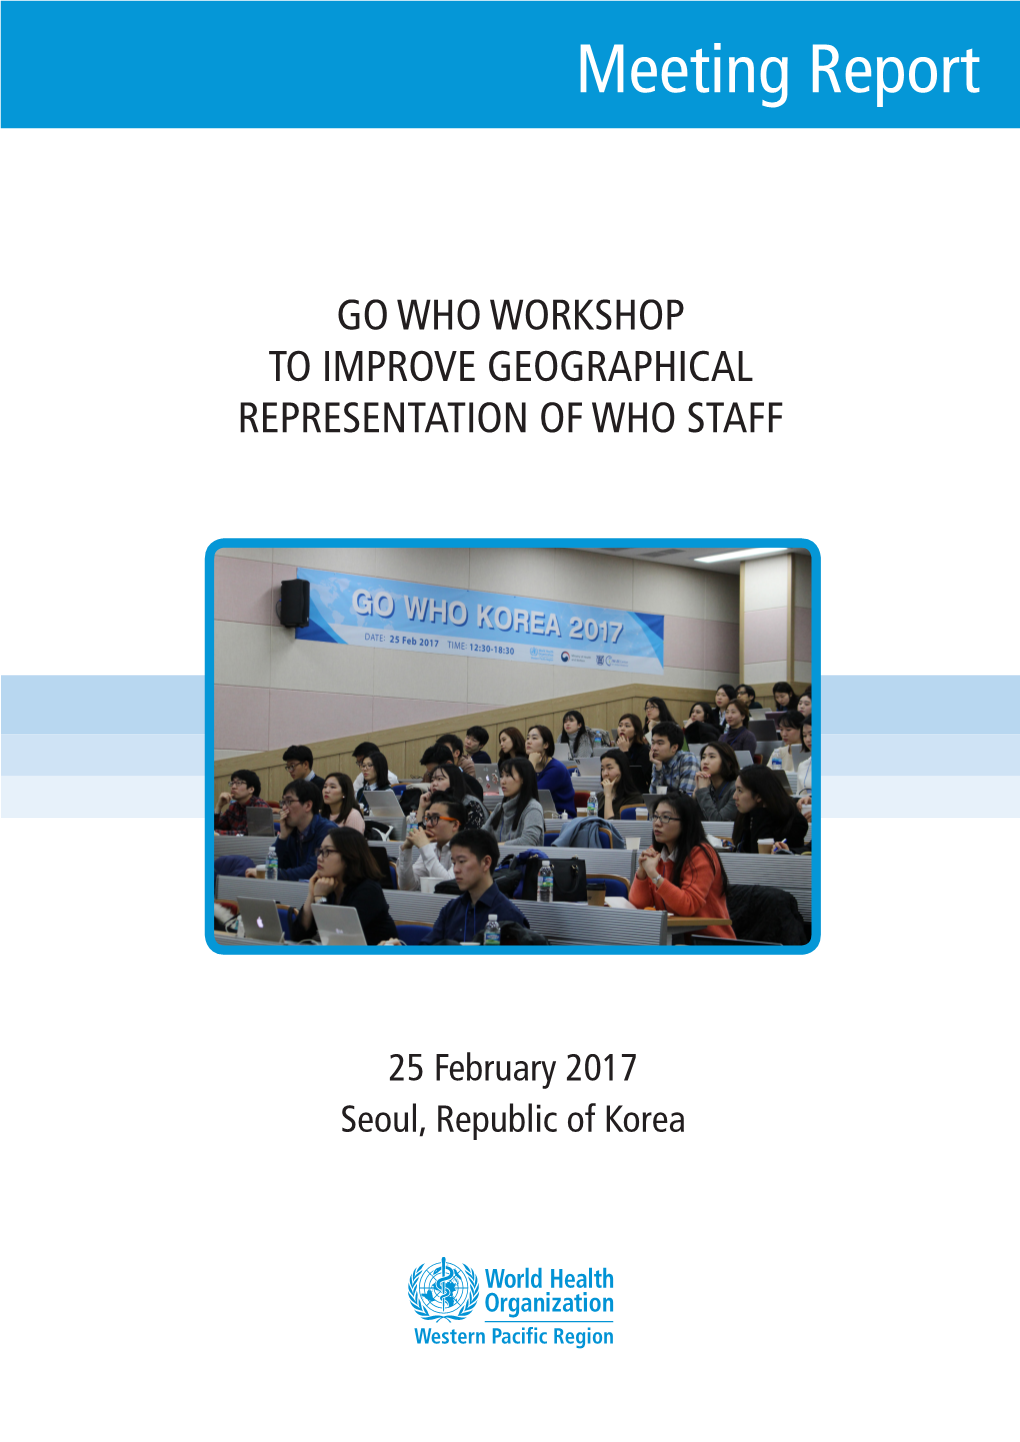 25 February 2017 Seoul, Republic of Korea GO WHO Workshop to Improve Geographical Representation of WHO Staff 25 February 2017 Seoul, Republic of Korea